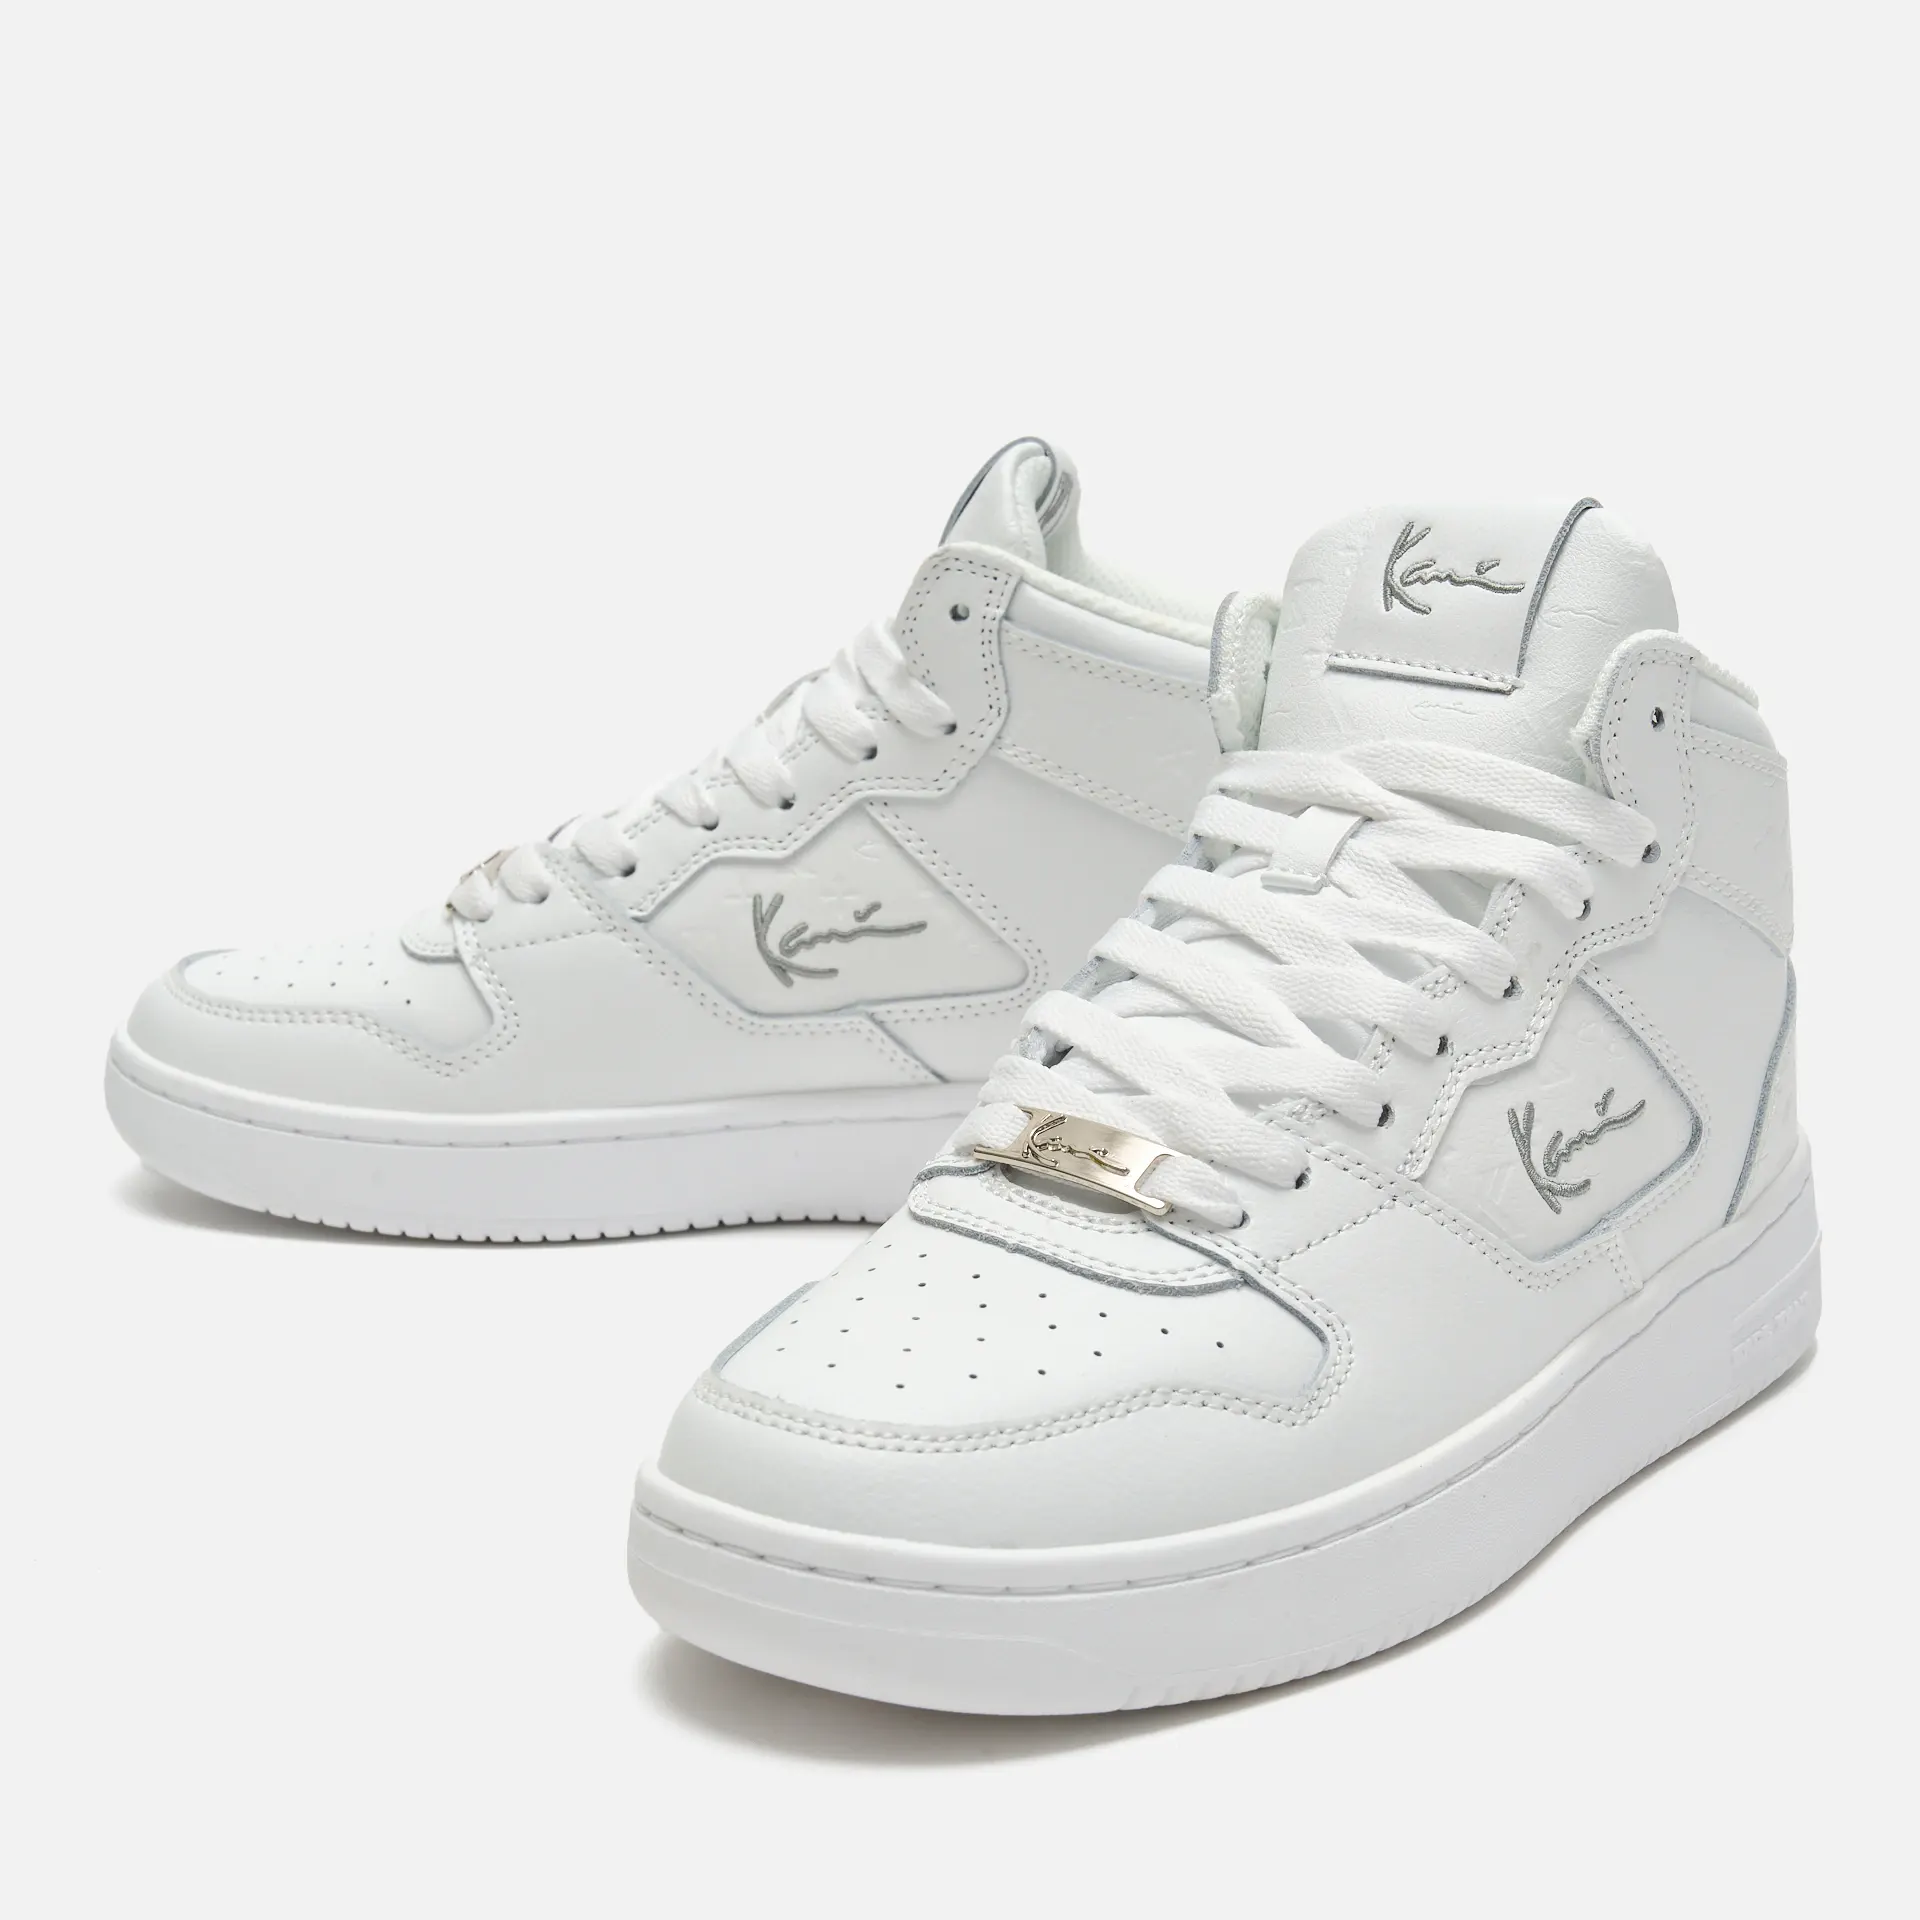 Karl Kani 89 High Premium Sneakers White